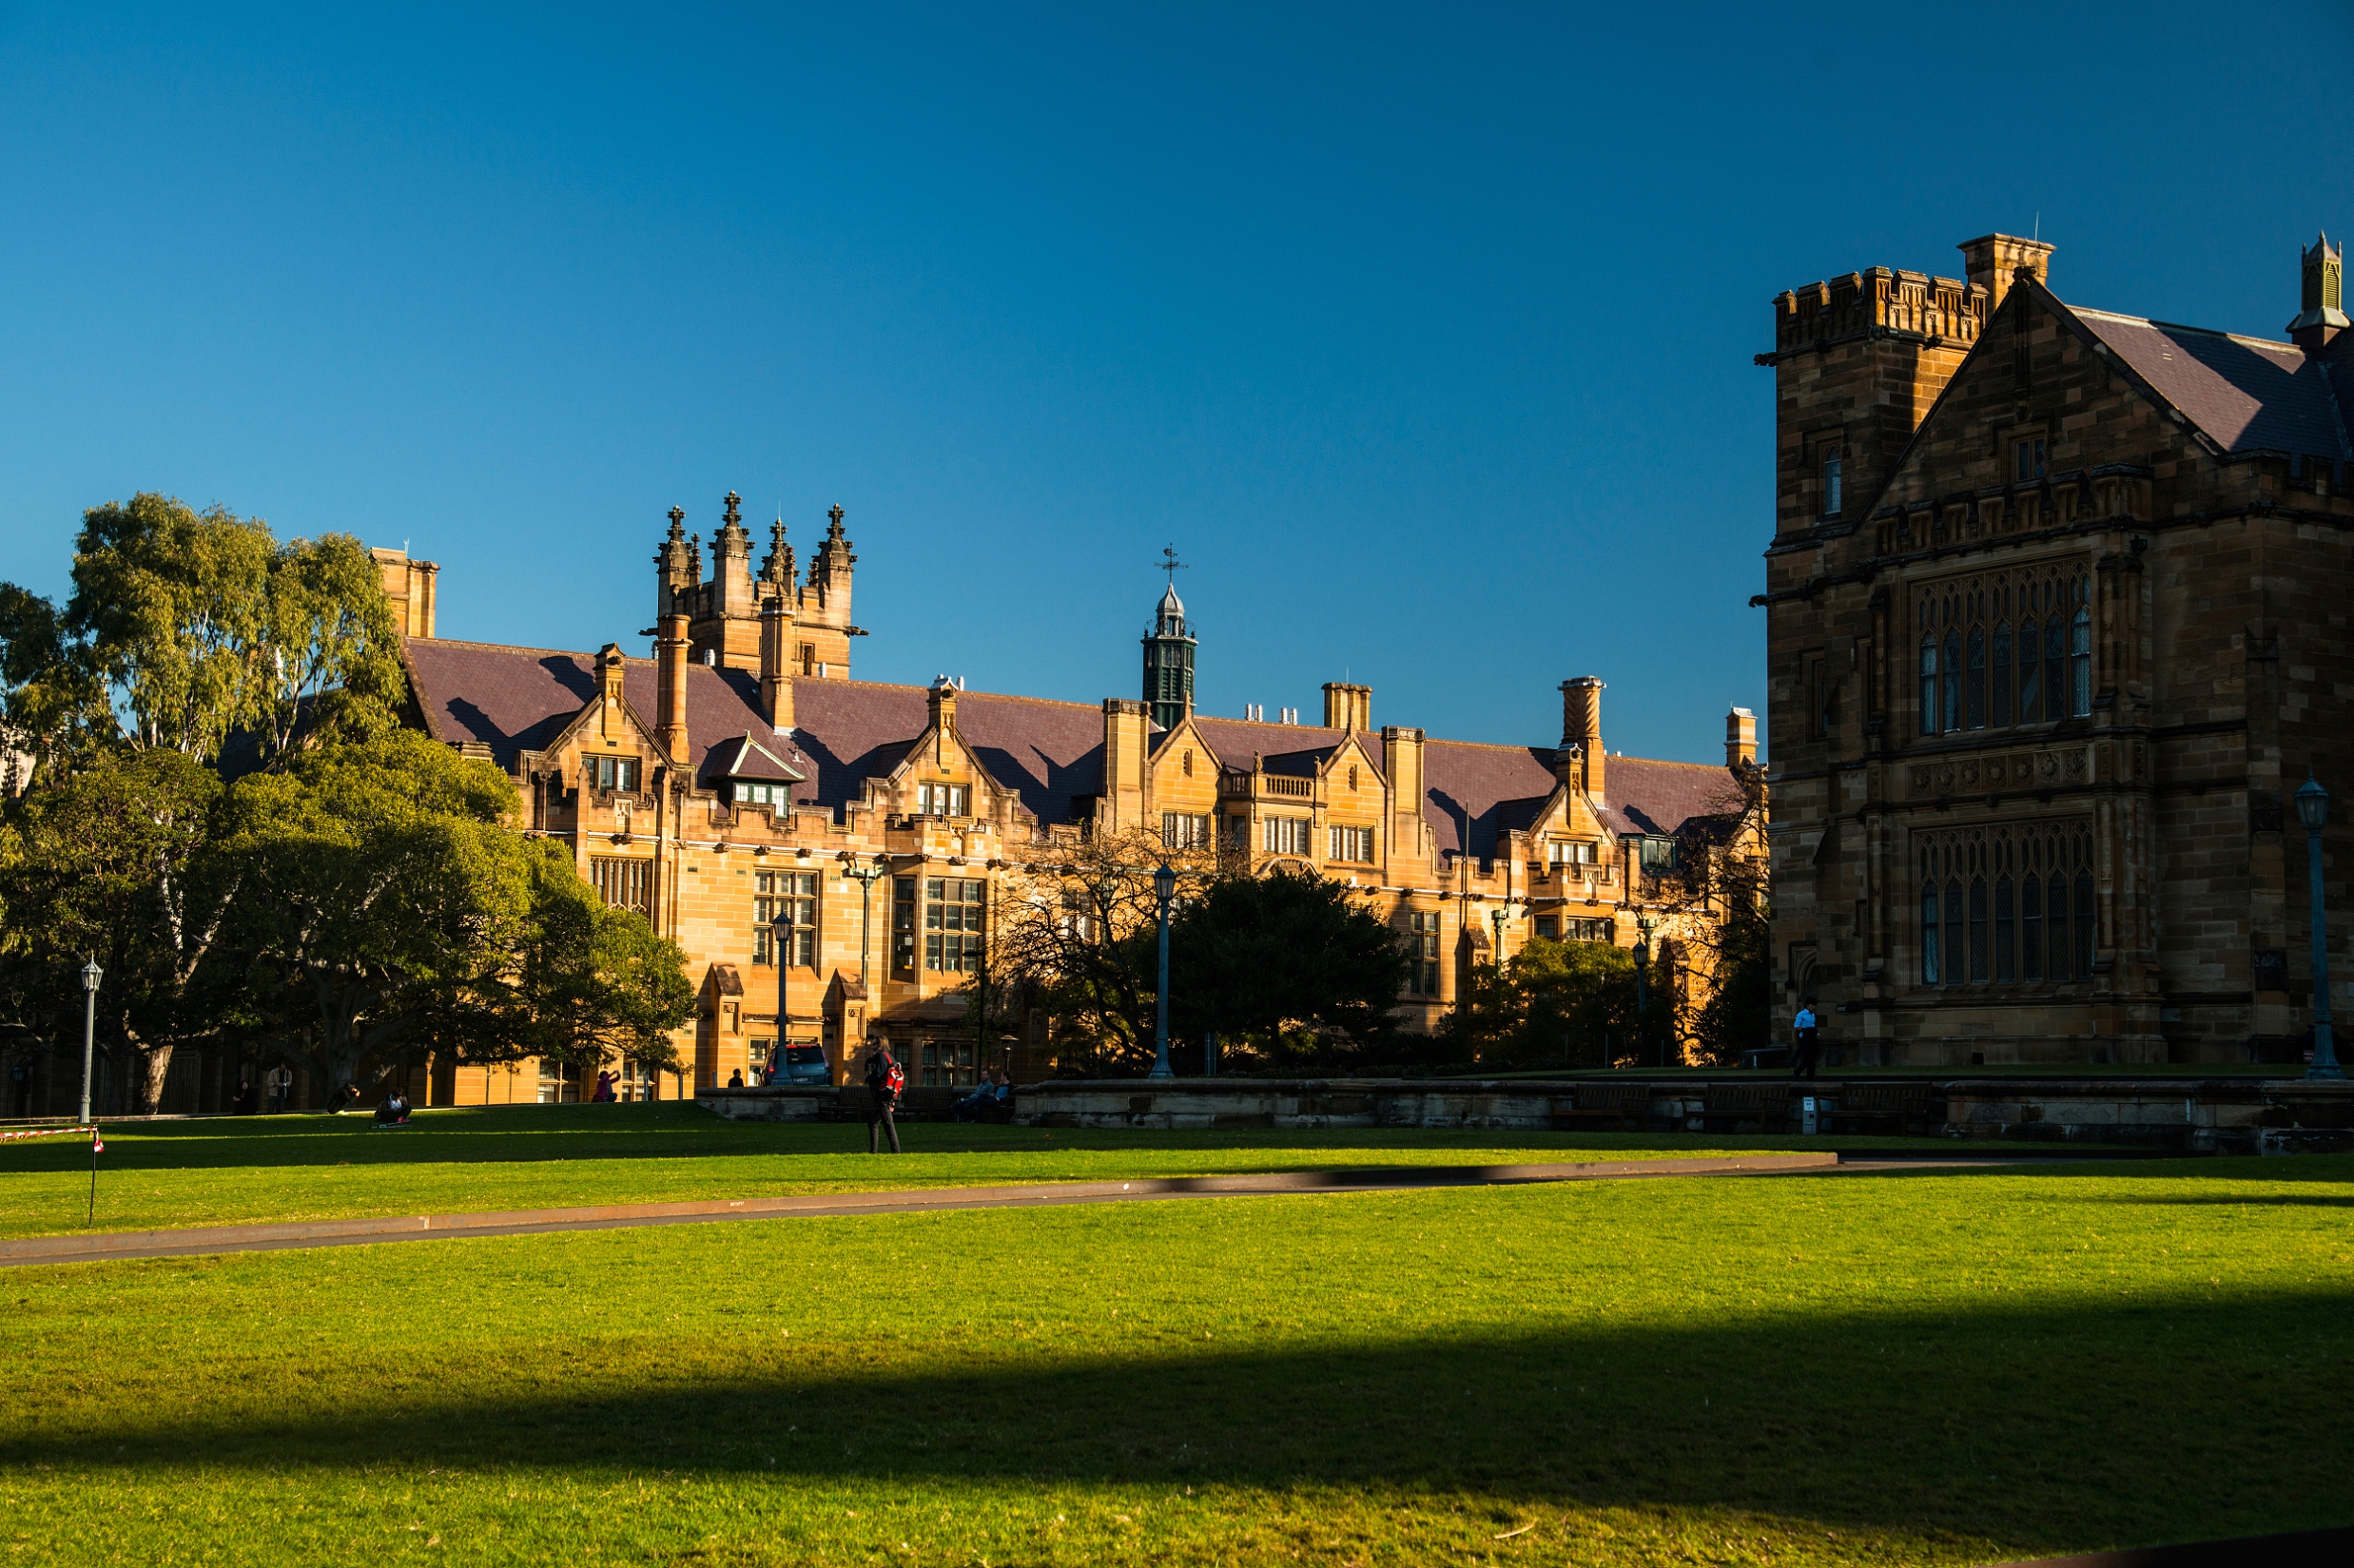 悉尼大学（The University of Sydney） - UNILINK